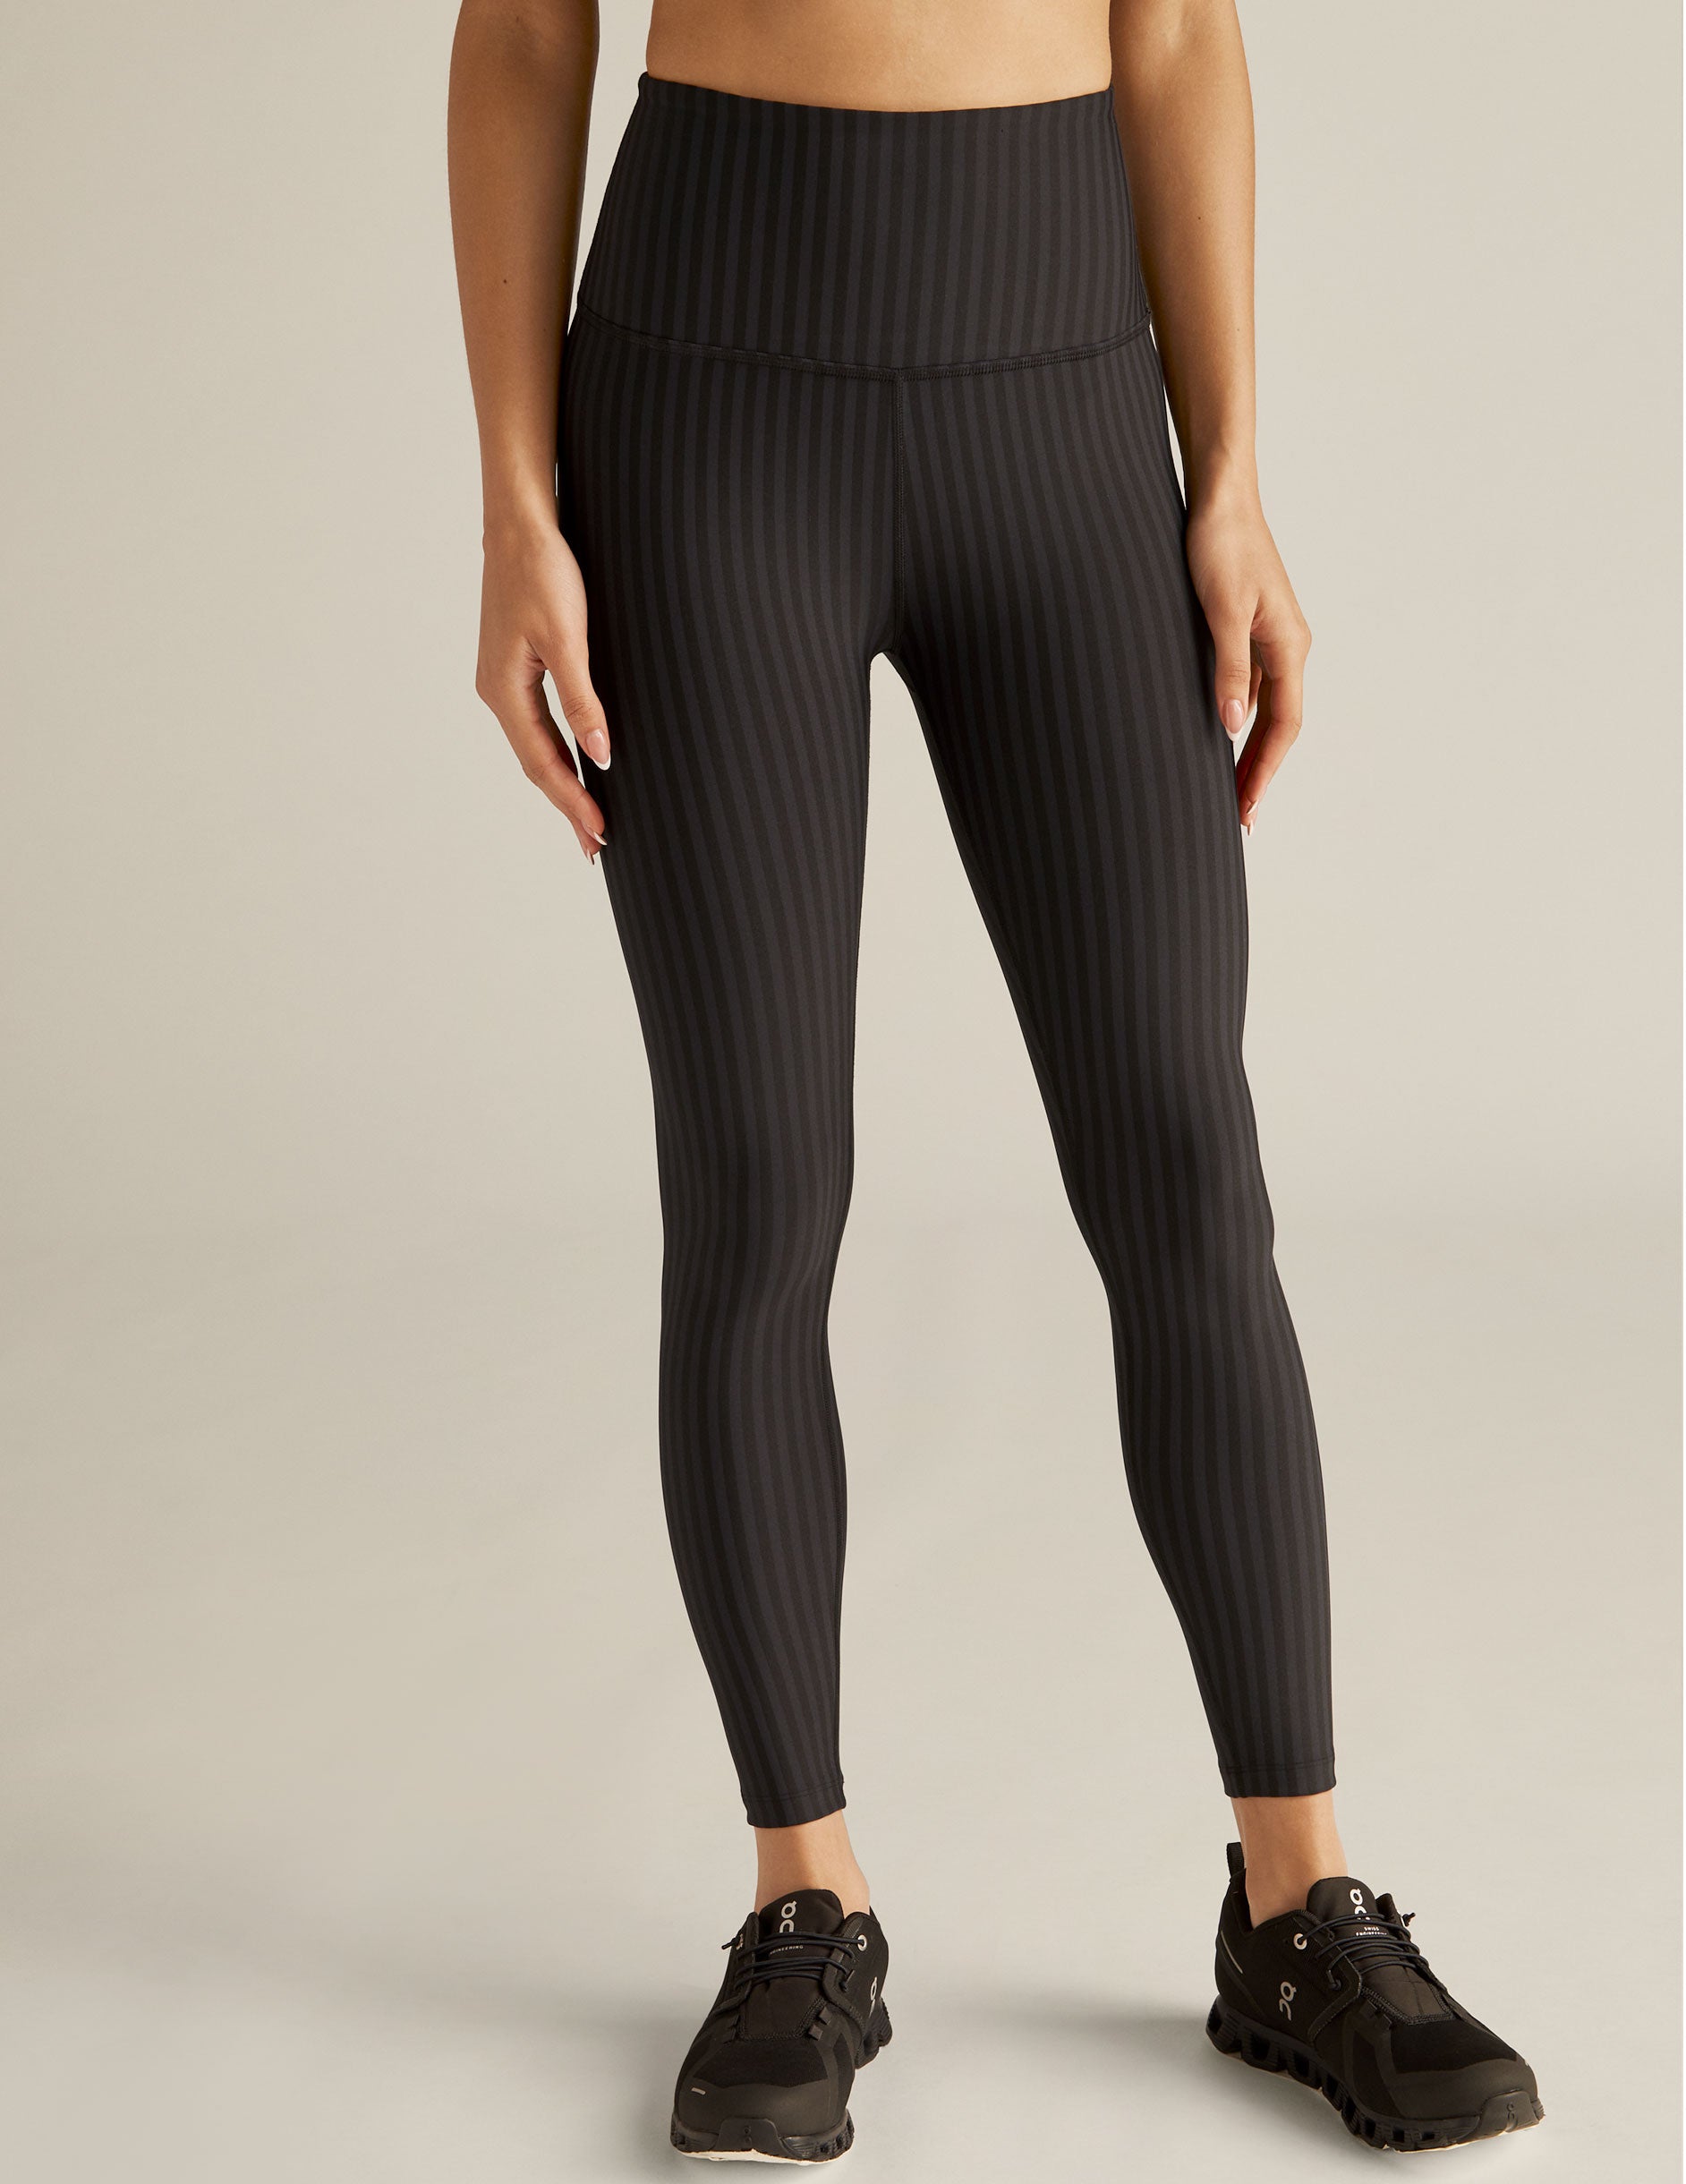 black pin-striped patterned high-waisted midi leggings. 